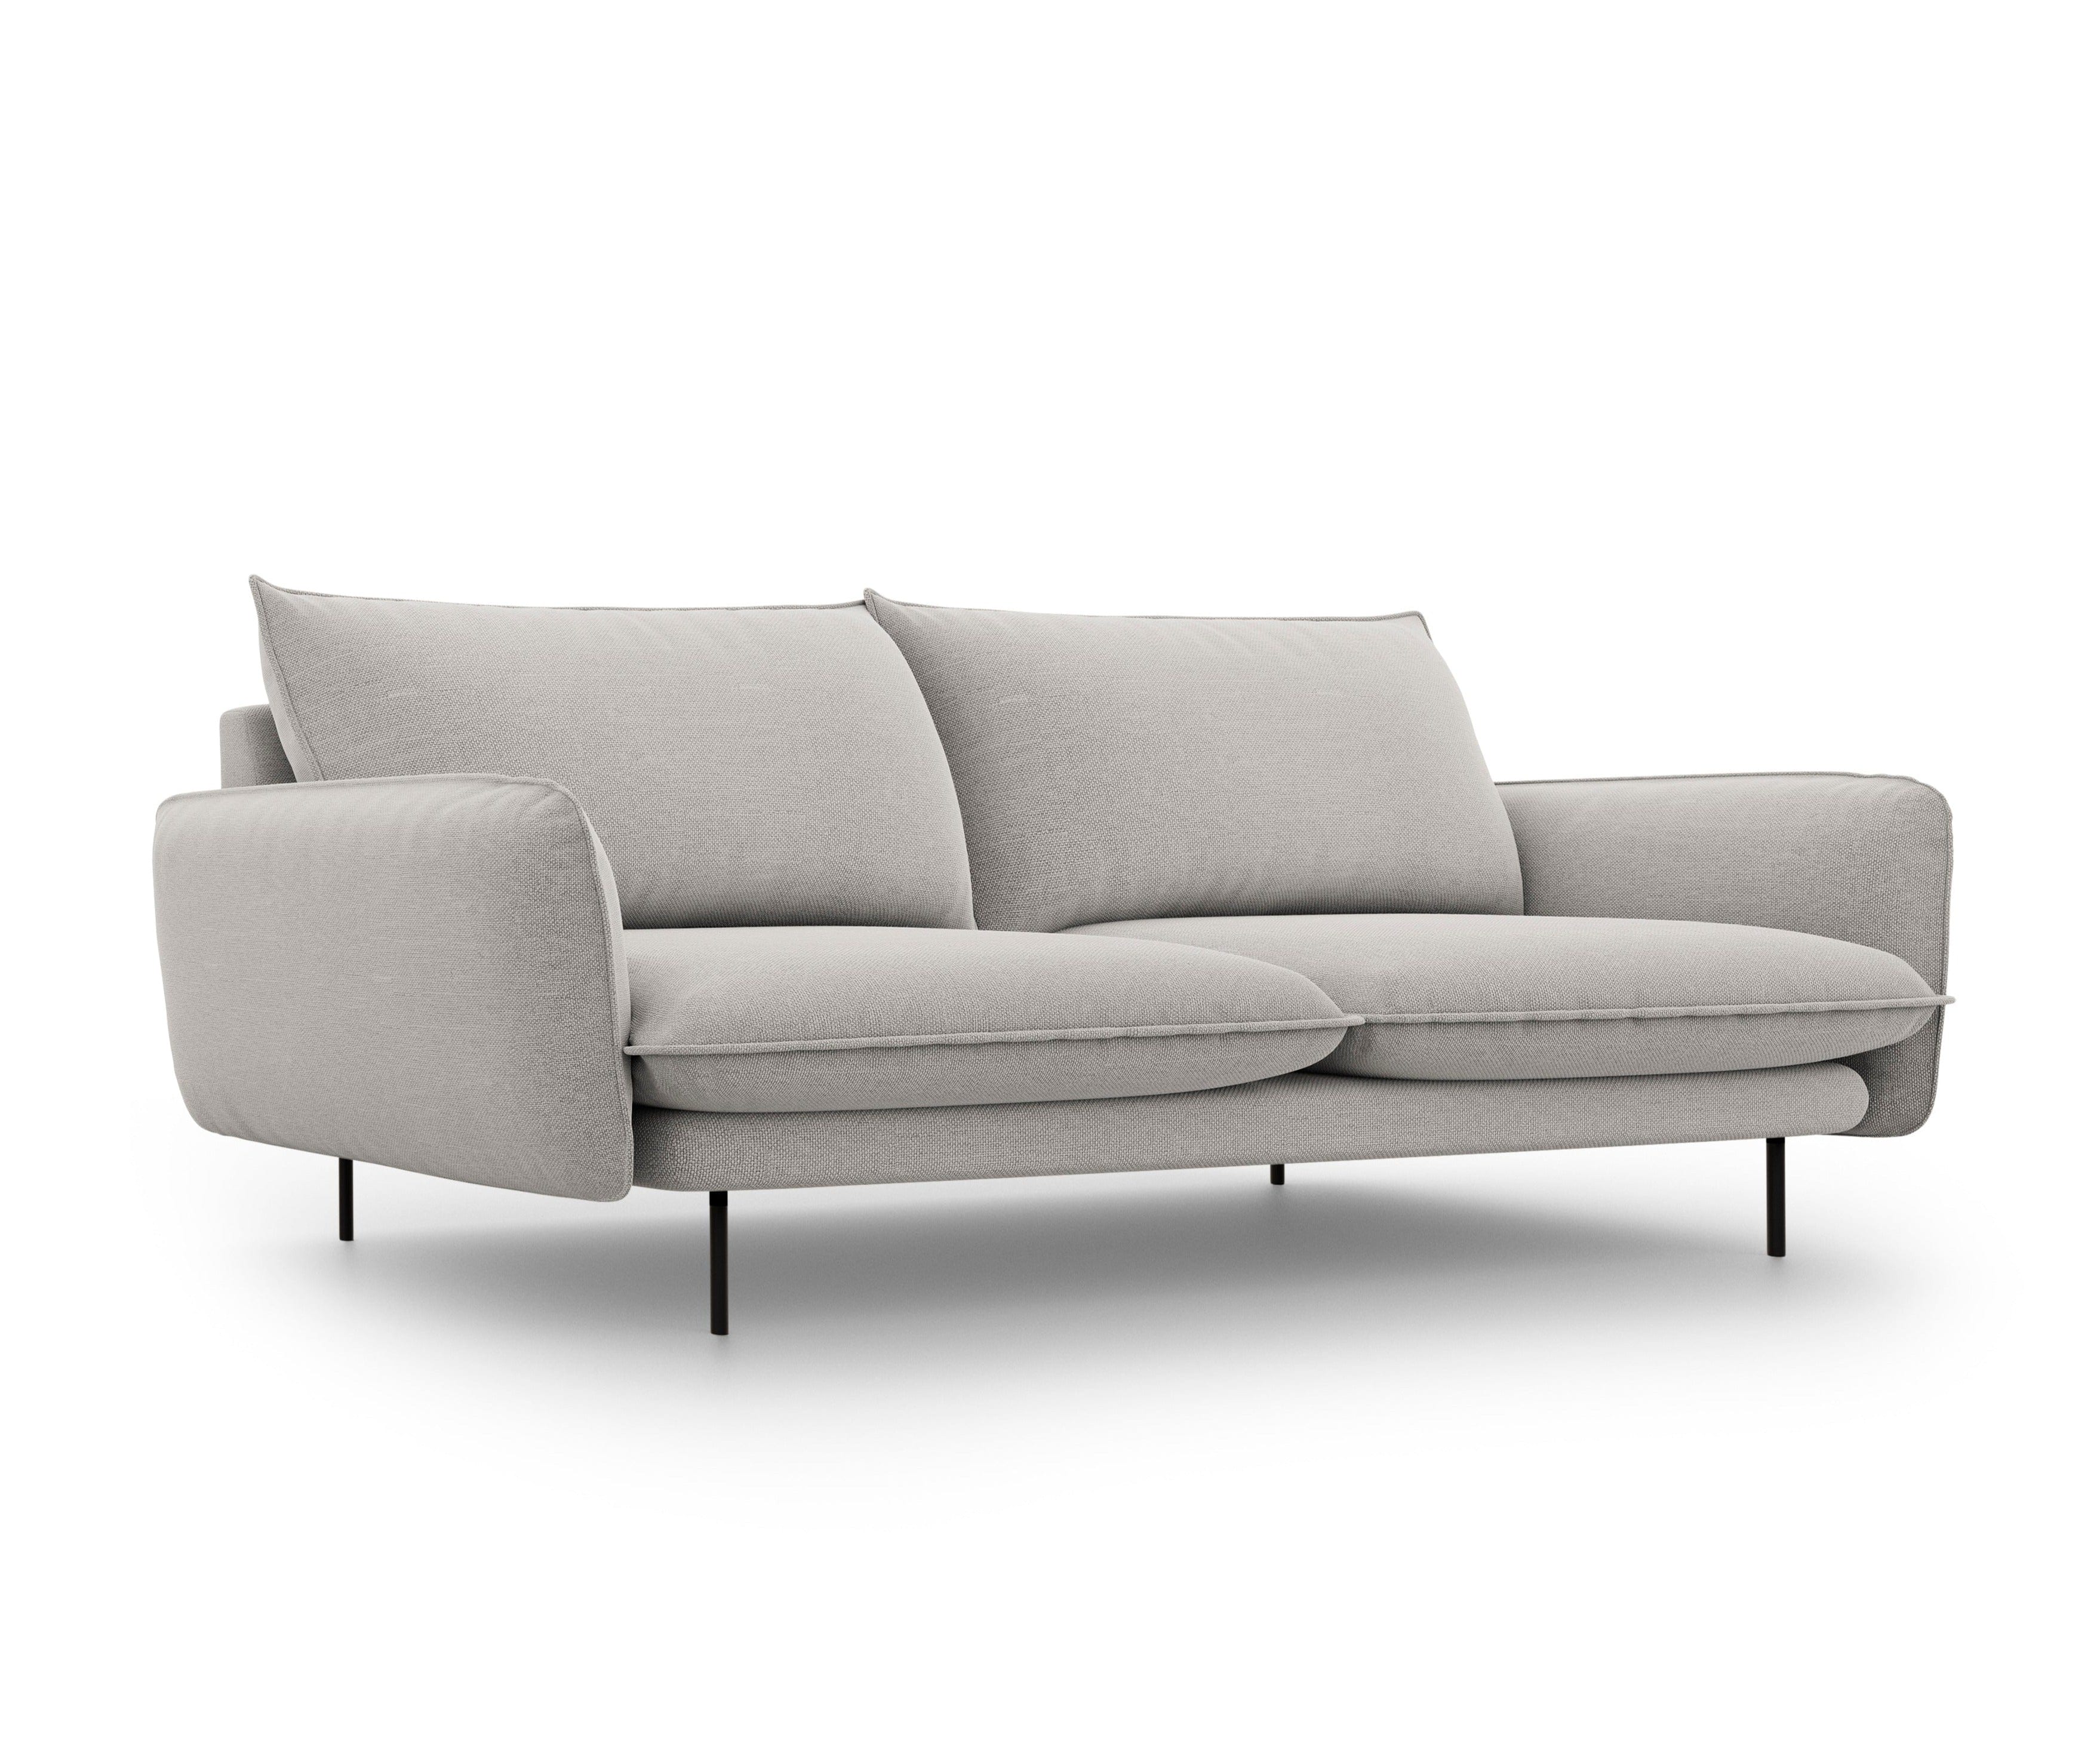 4-seater sofa VIENNA light grey with black base